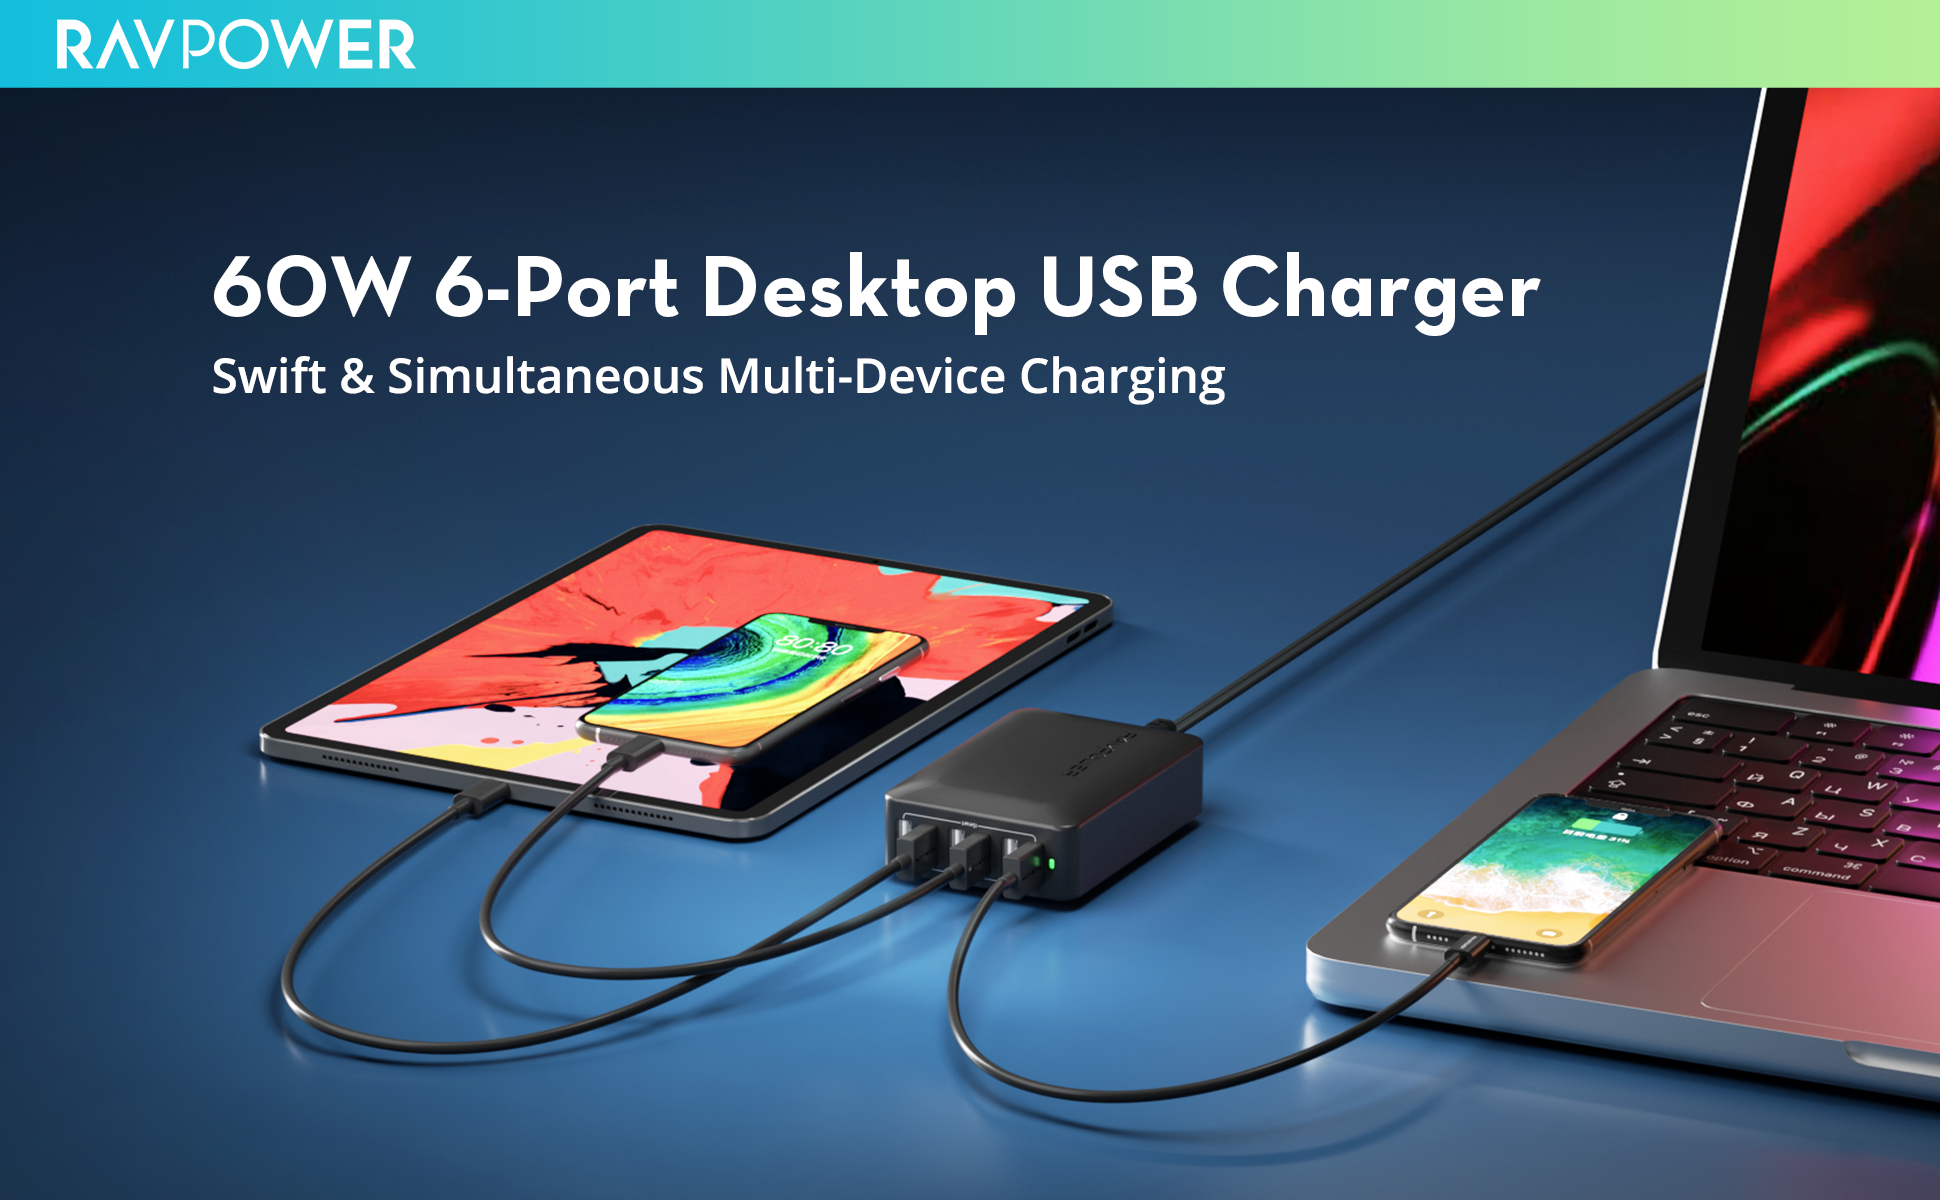 RAVPower 60W 12A 6-Port Desktop Charger